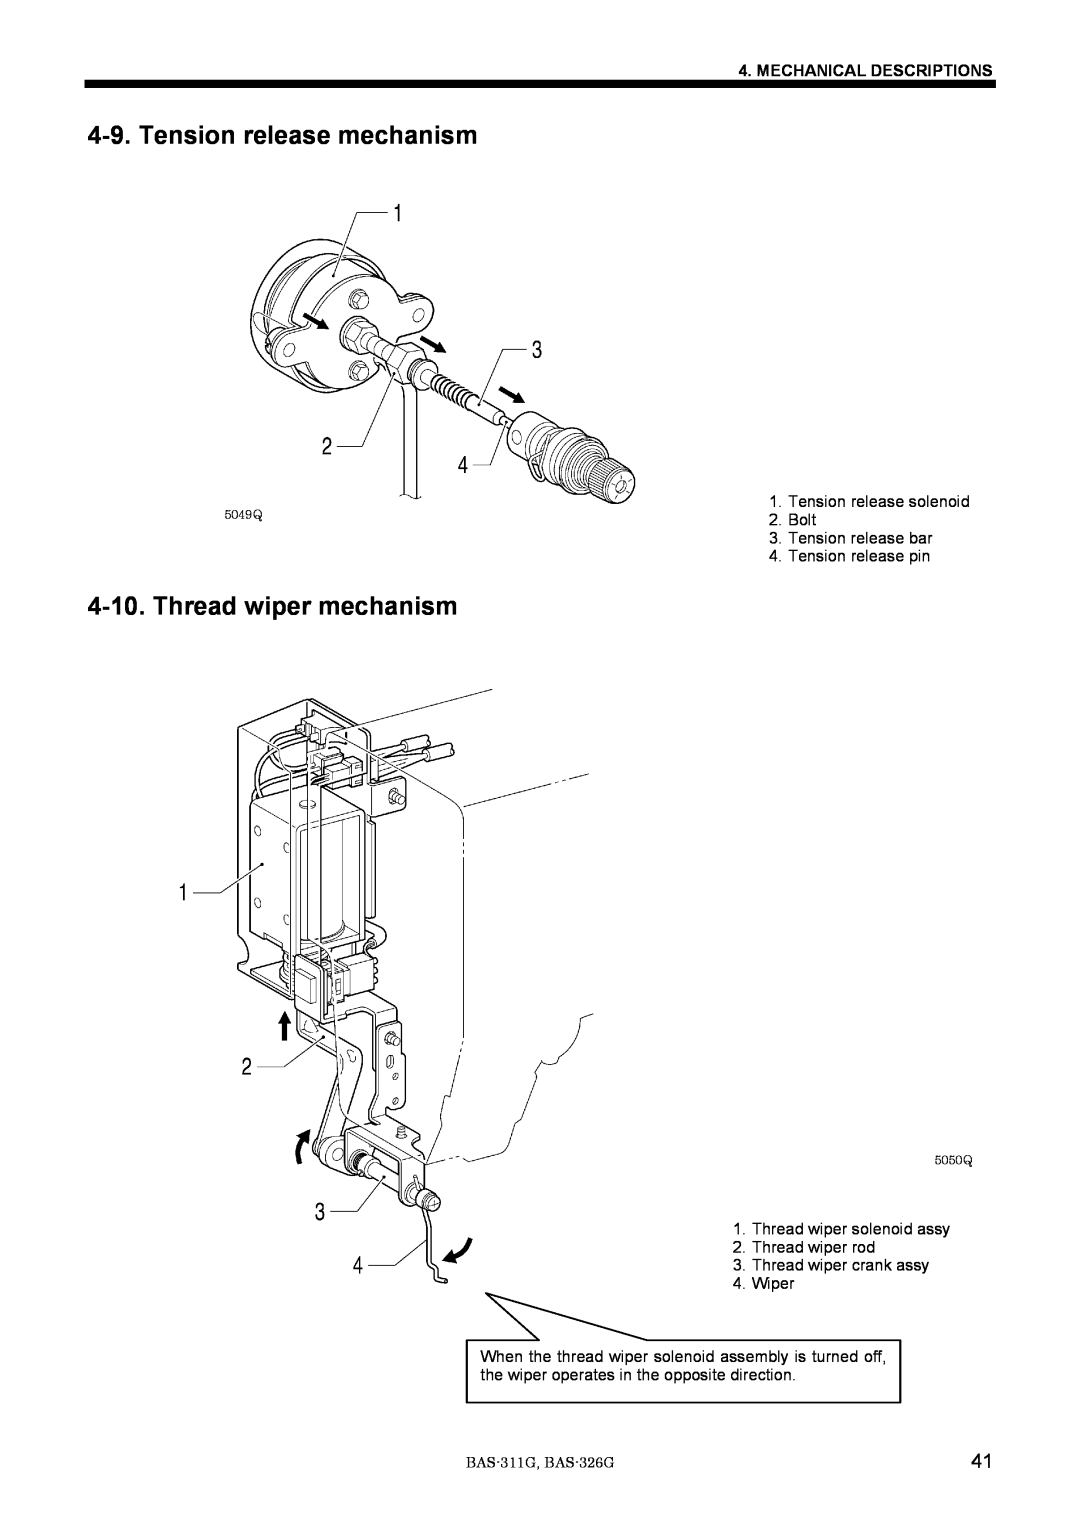 Brother Tension release mechanism, Thread wiper mechanism, Mechanical Descriptions, BAS-311G, BAS-326G, 5049Q, 5050Q 